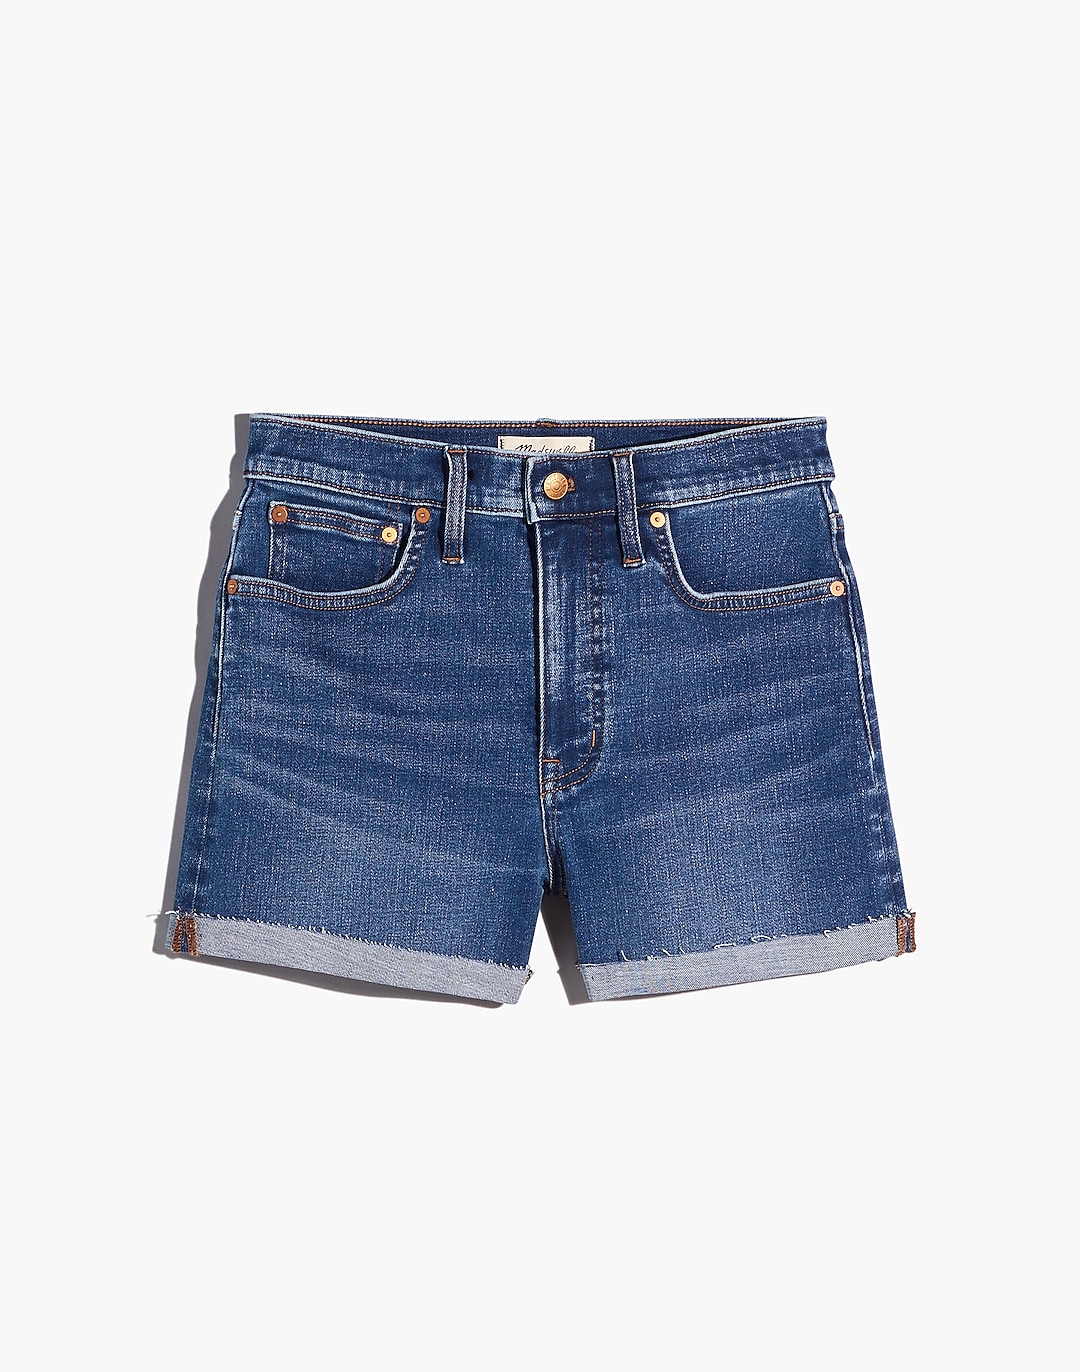 High-Rise Denim Shorts in Onaway Wash | Madewell